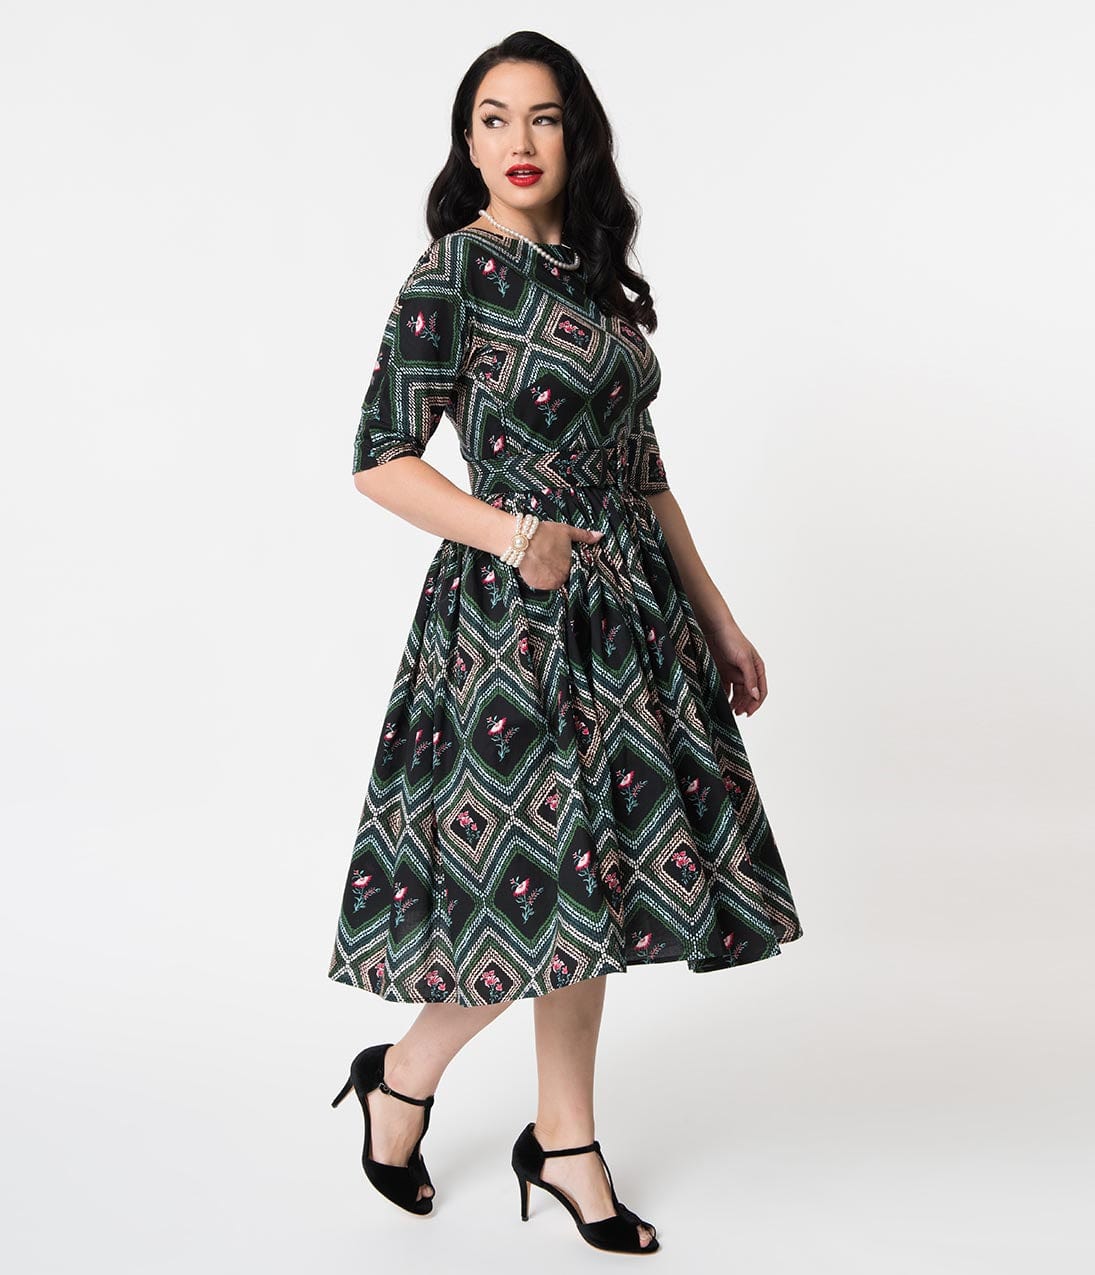 Unique Vintage 1950s Style Black & Green Diamond Print Sleeved Sally Swing Dress